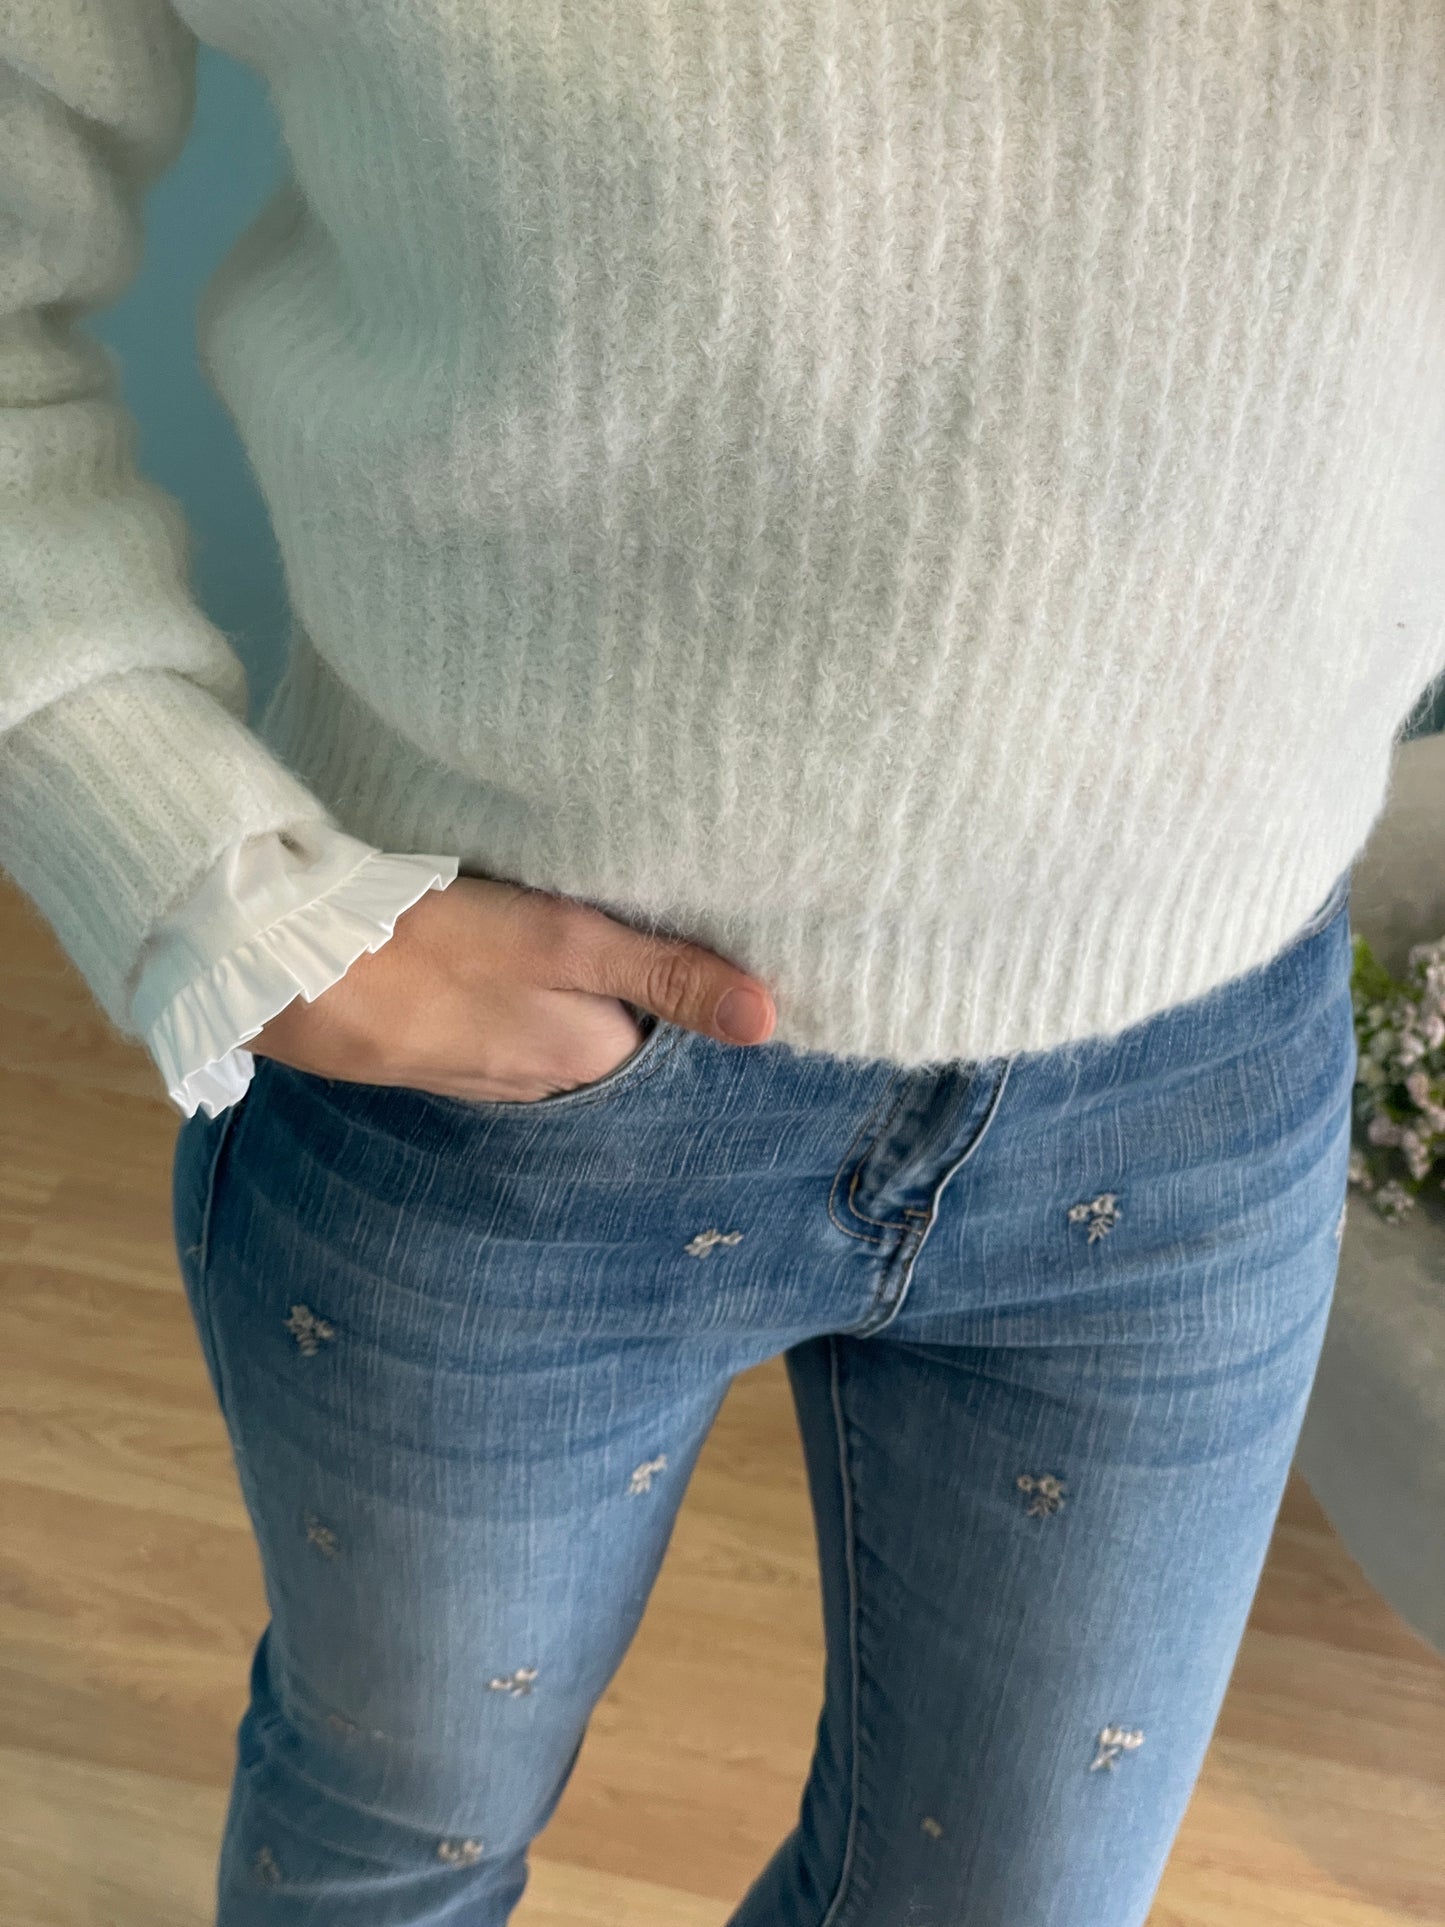 White Greta sweater